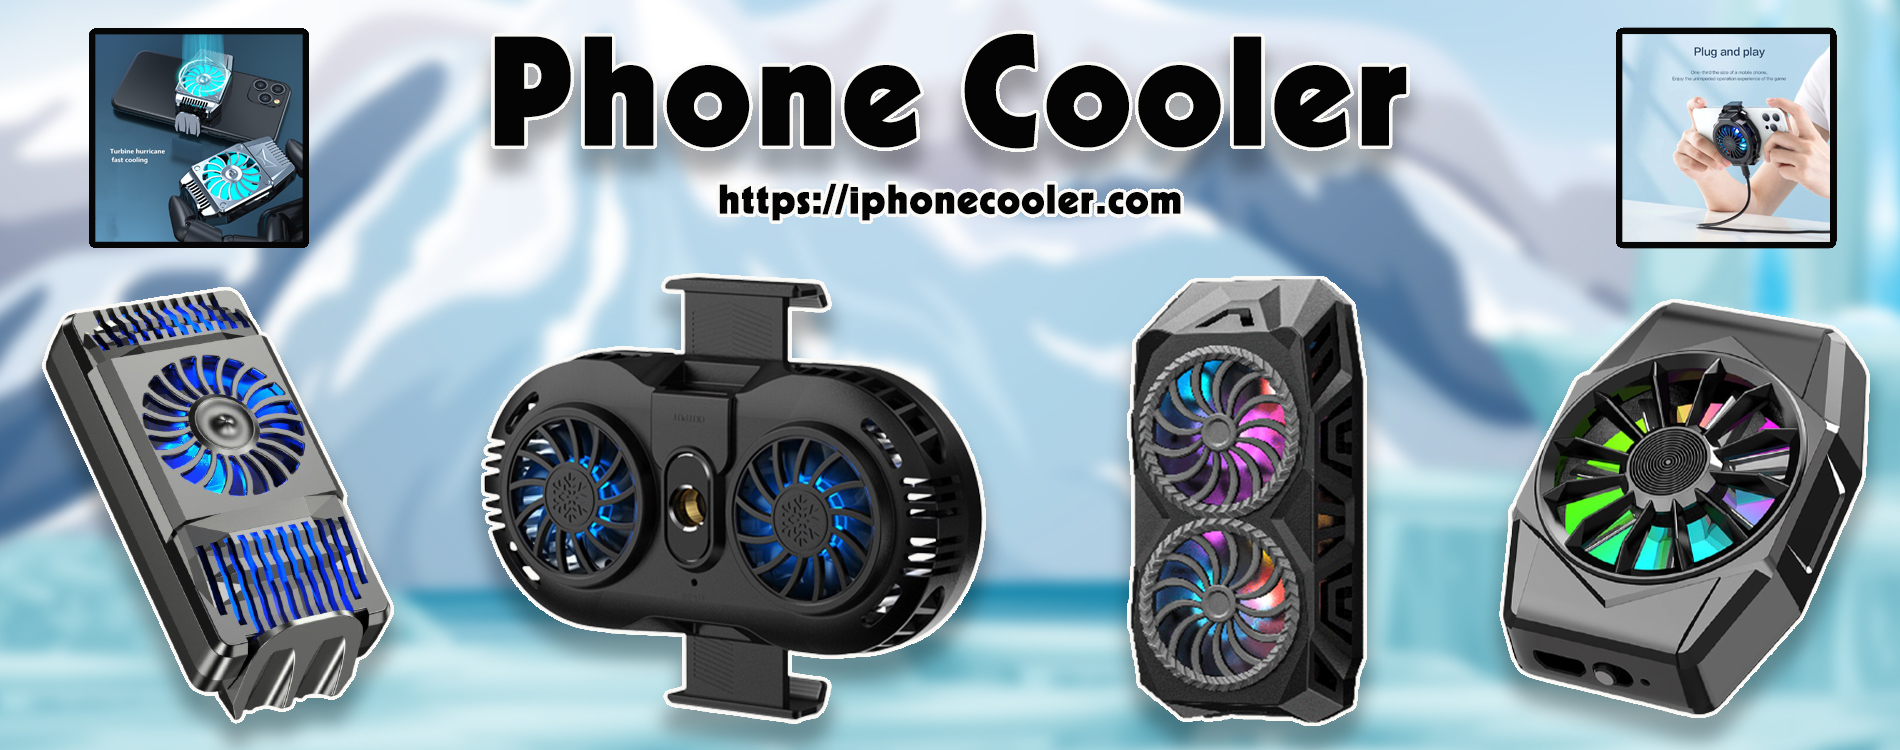 phone-cooler-banner